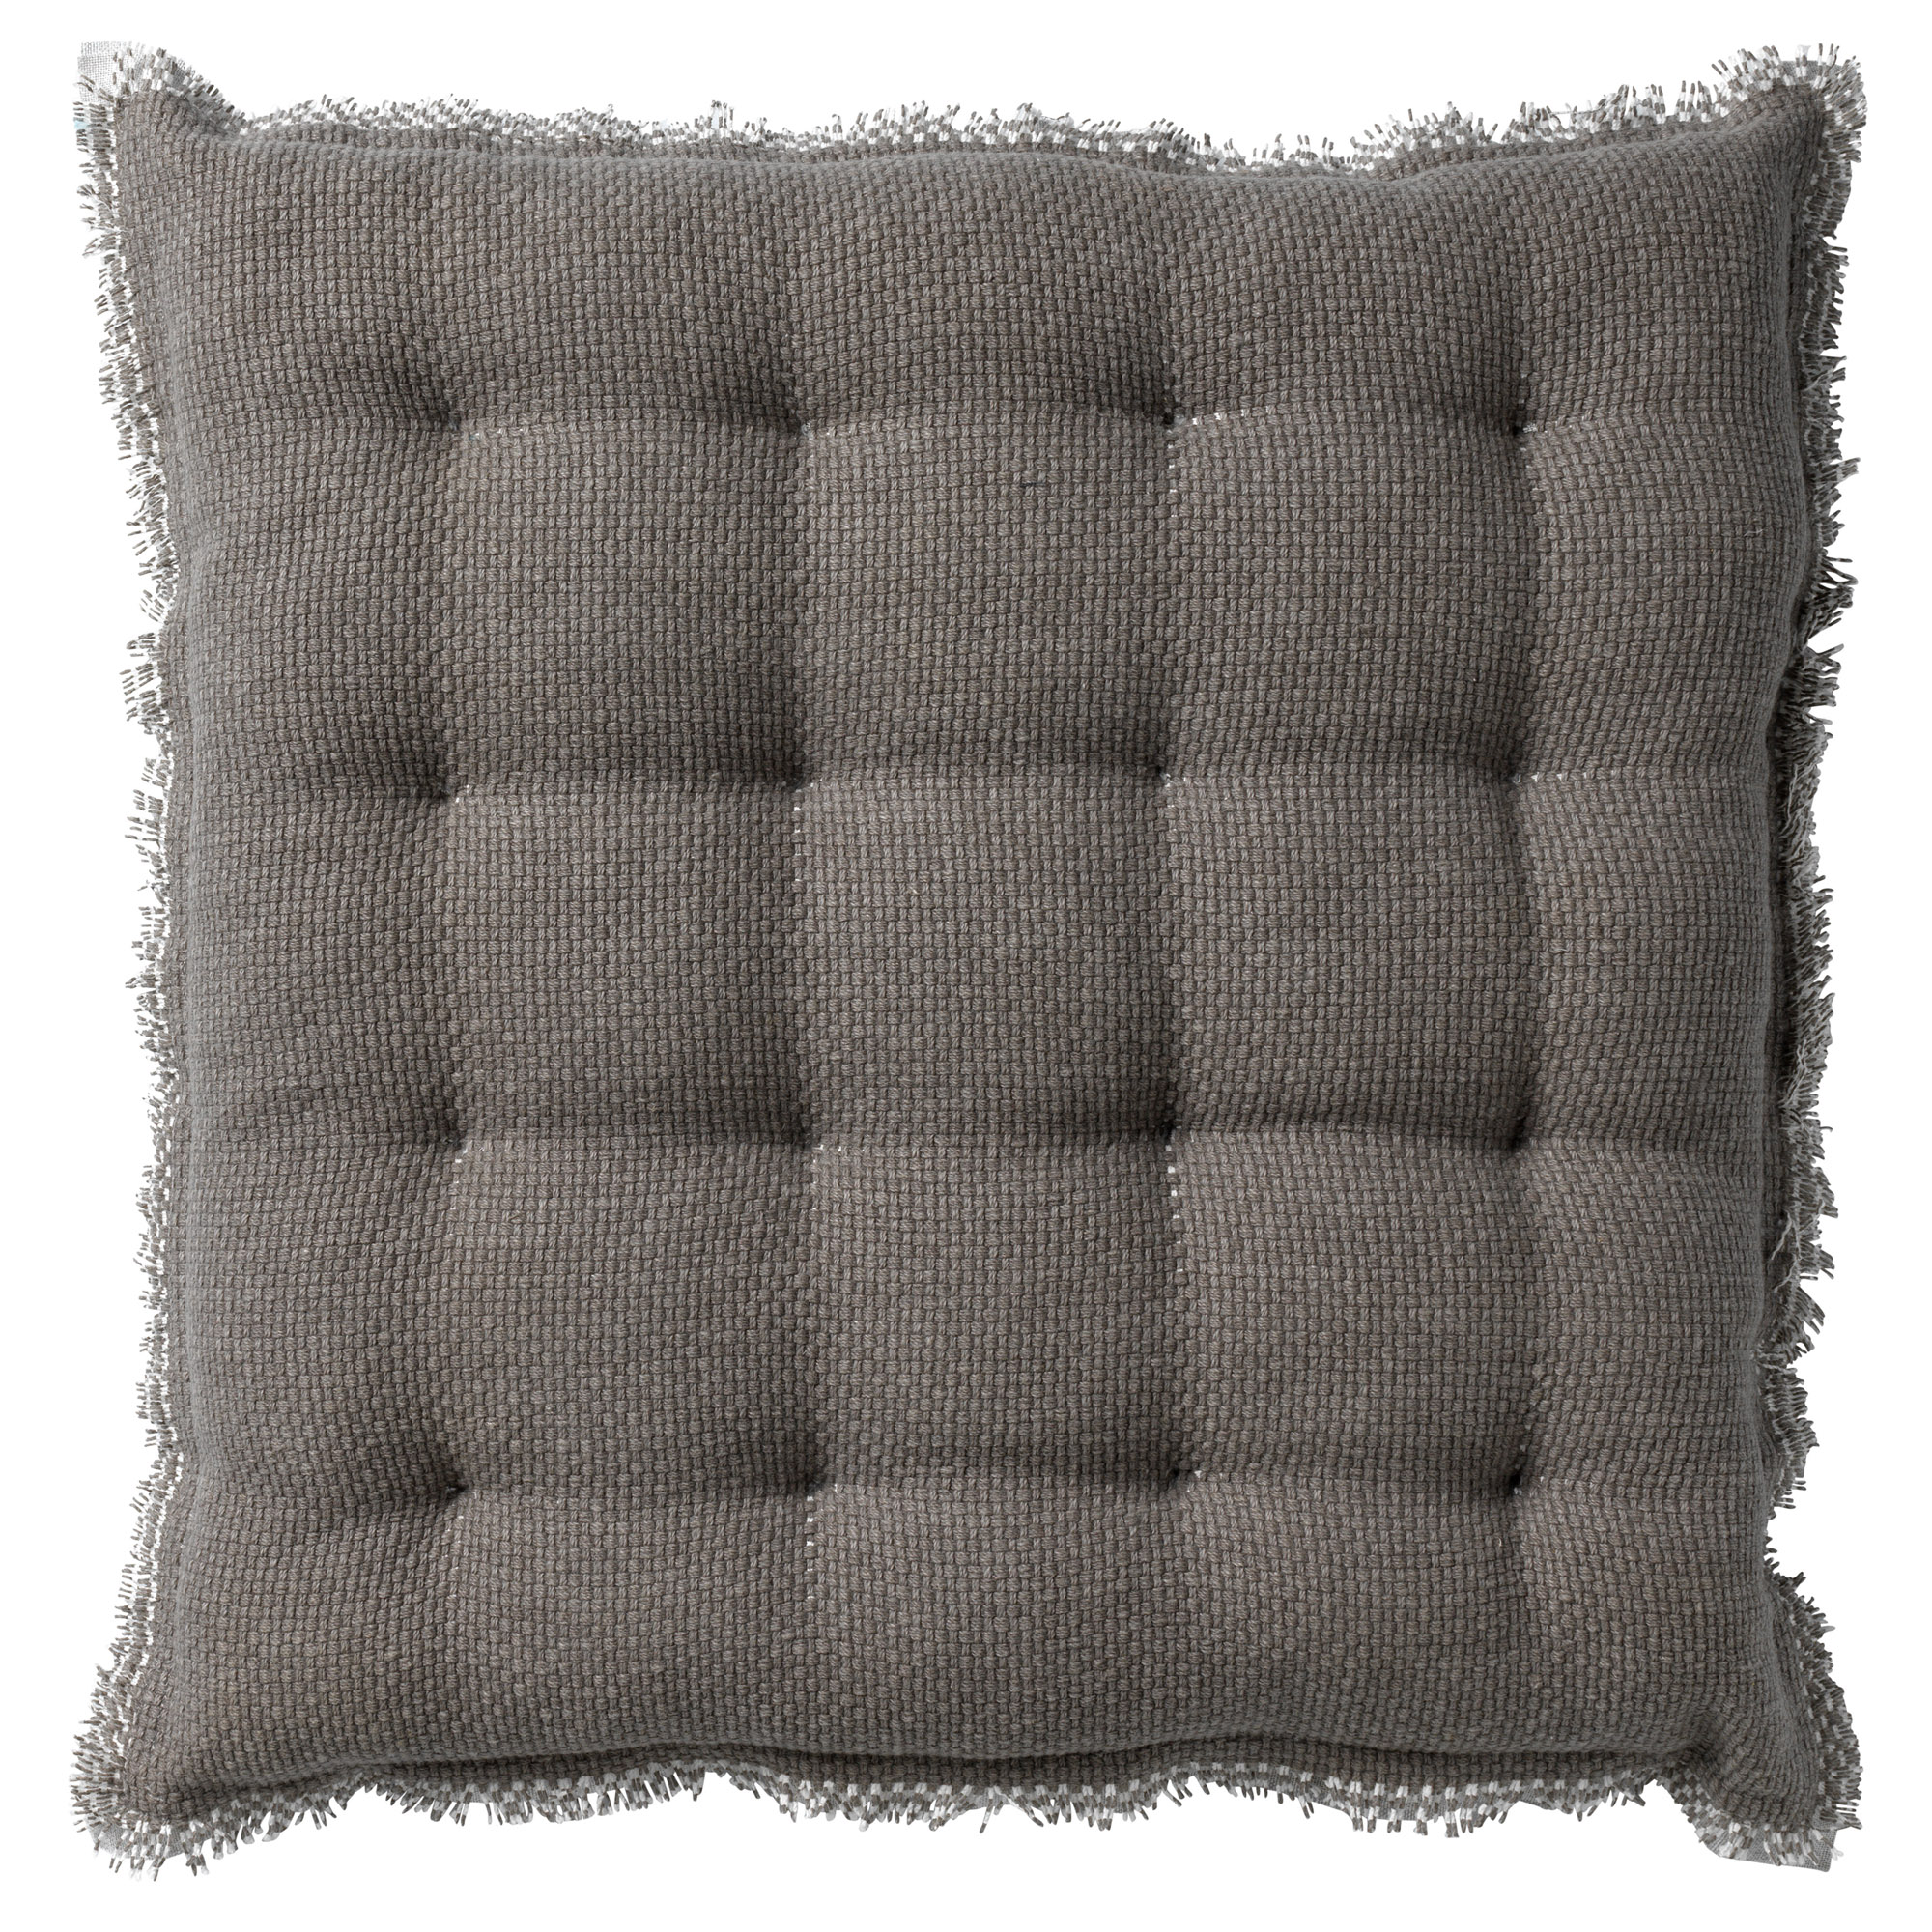 BURTO - Seat pad cushion washed coton Driftwood 40x40 cm